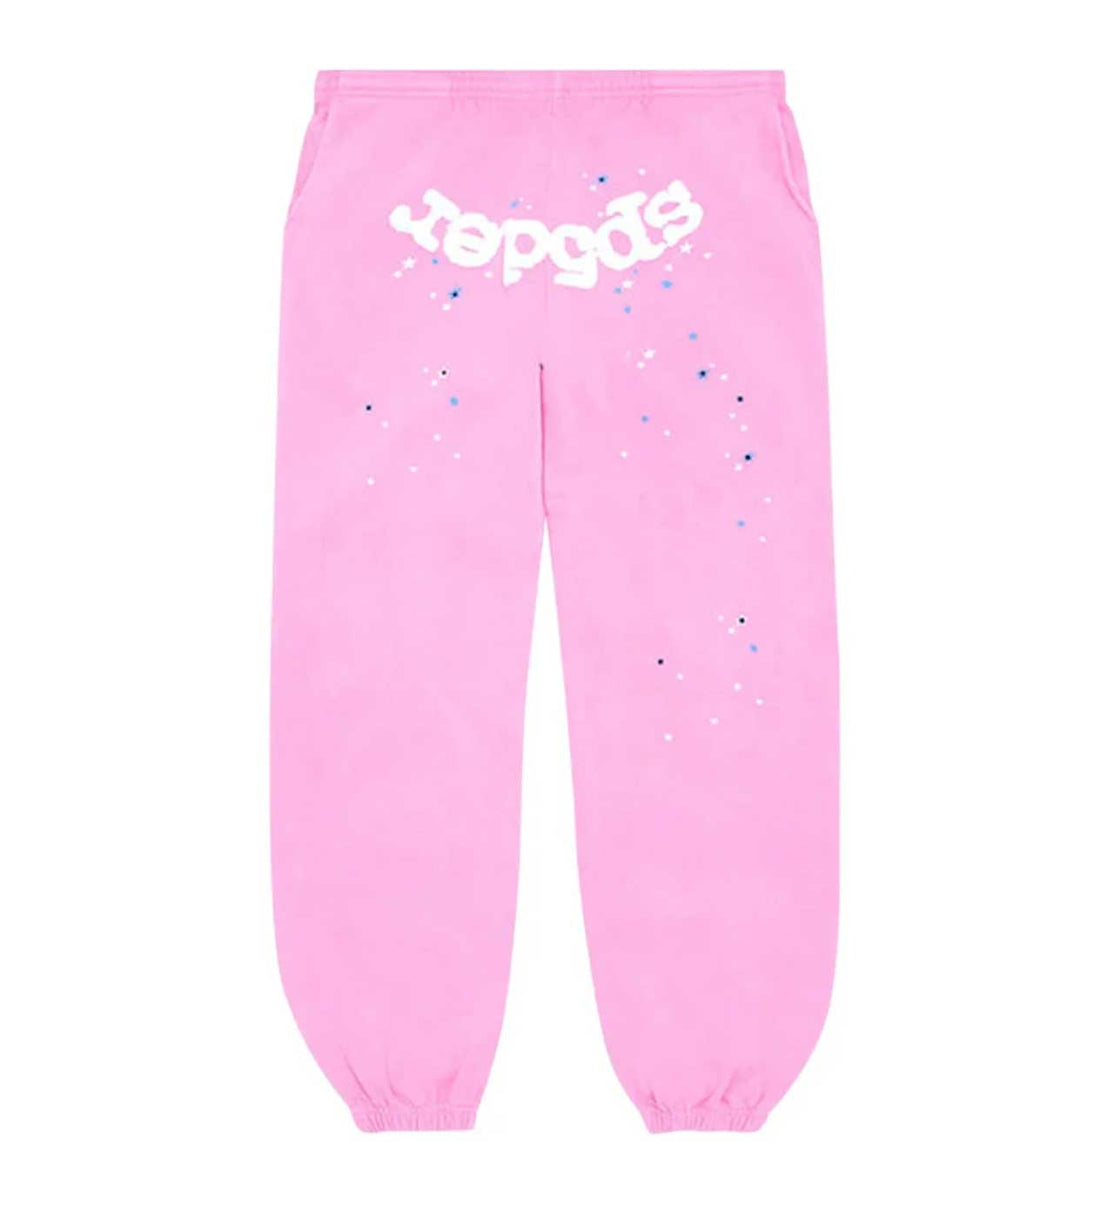 Product Image Of Sp5der Atlanta Sweatpants Pink Front View